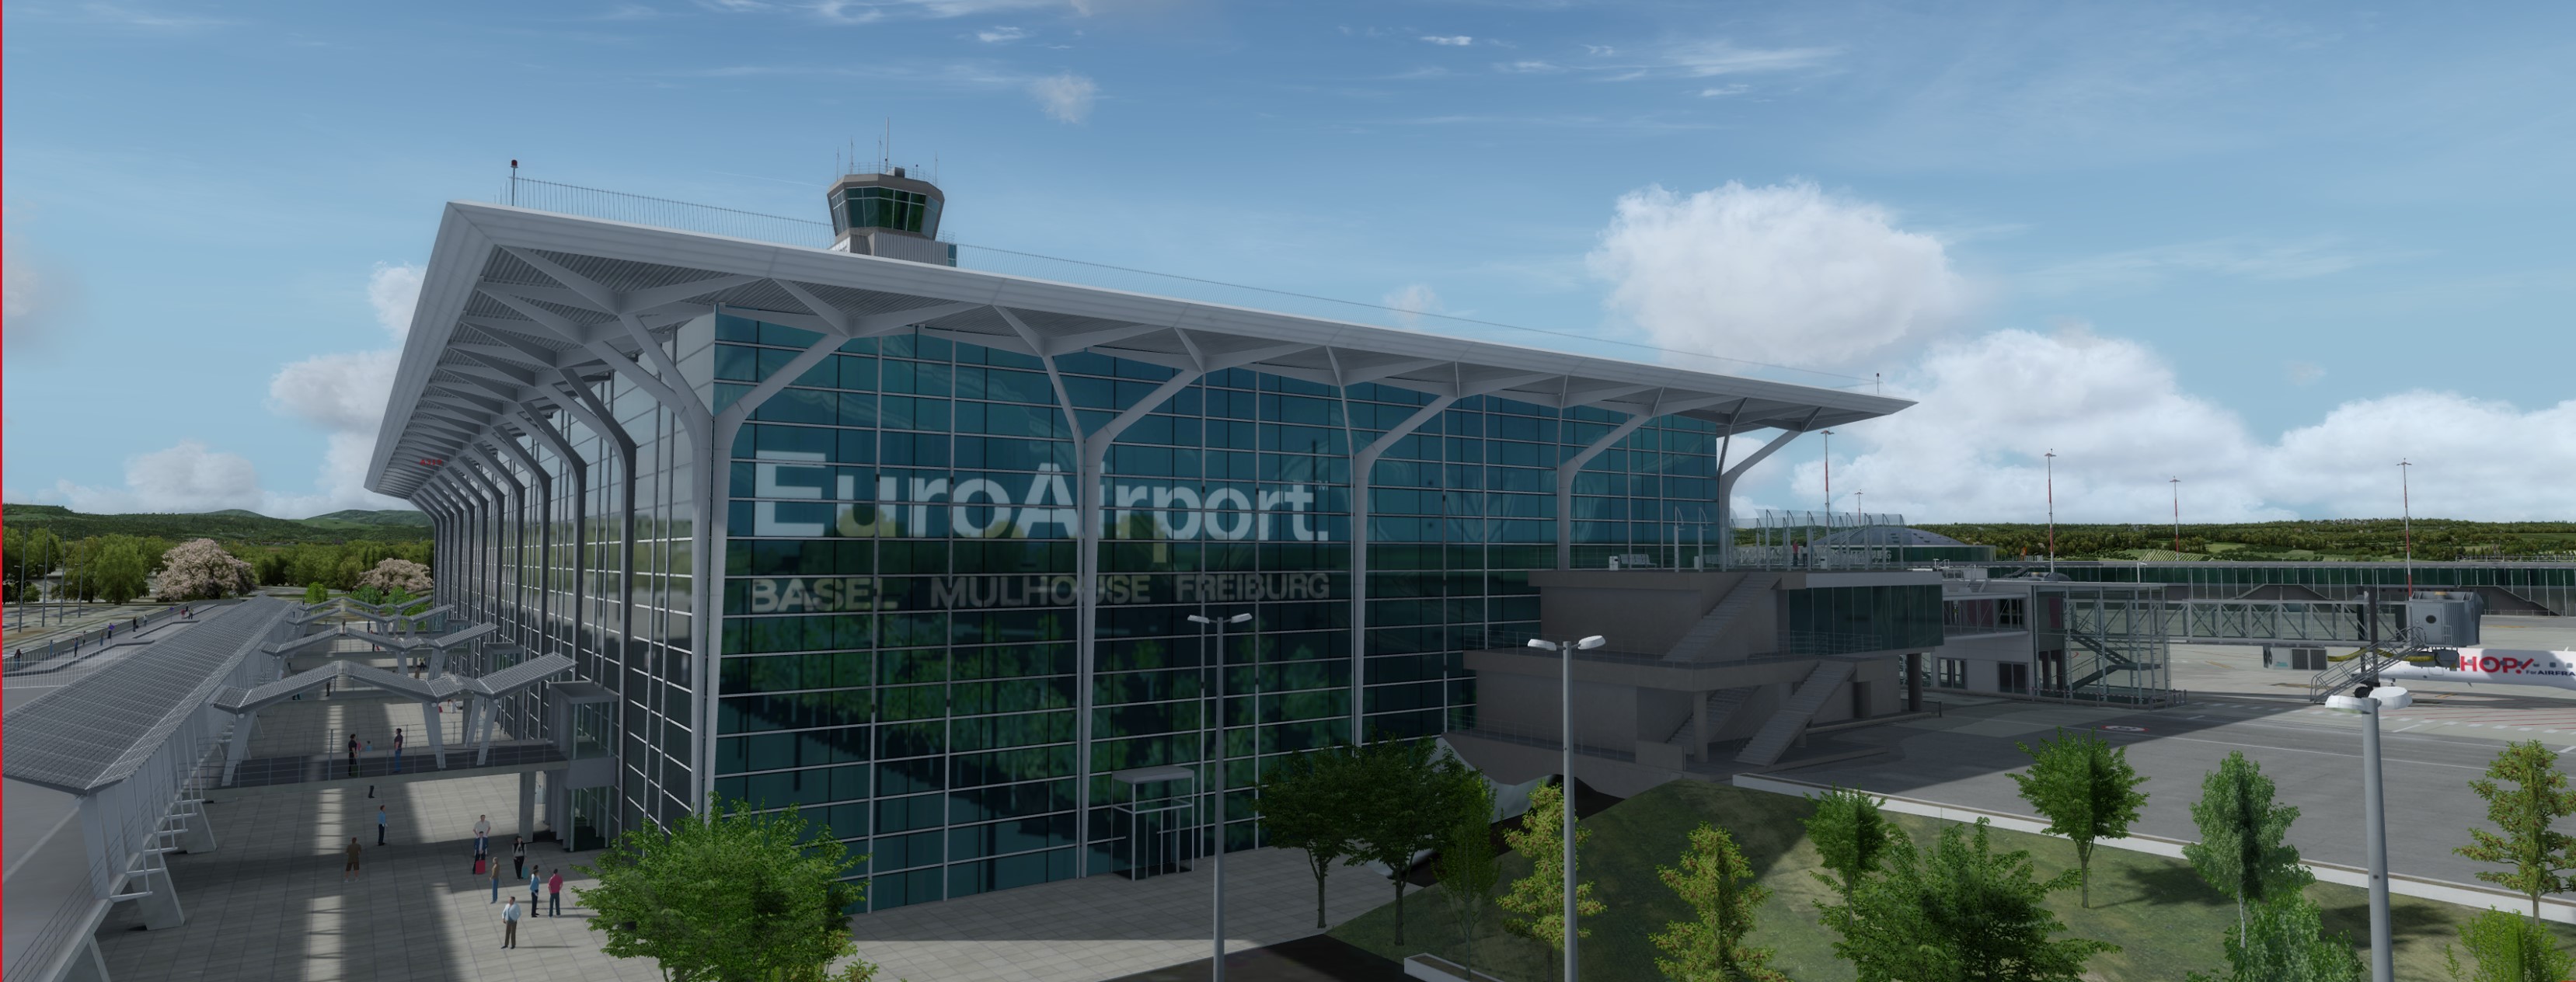 JustSim Announces Basel Mulhouse Freiburg Airport for Prepar3D V4